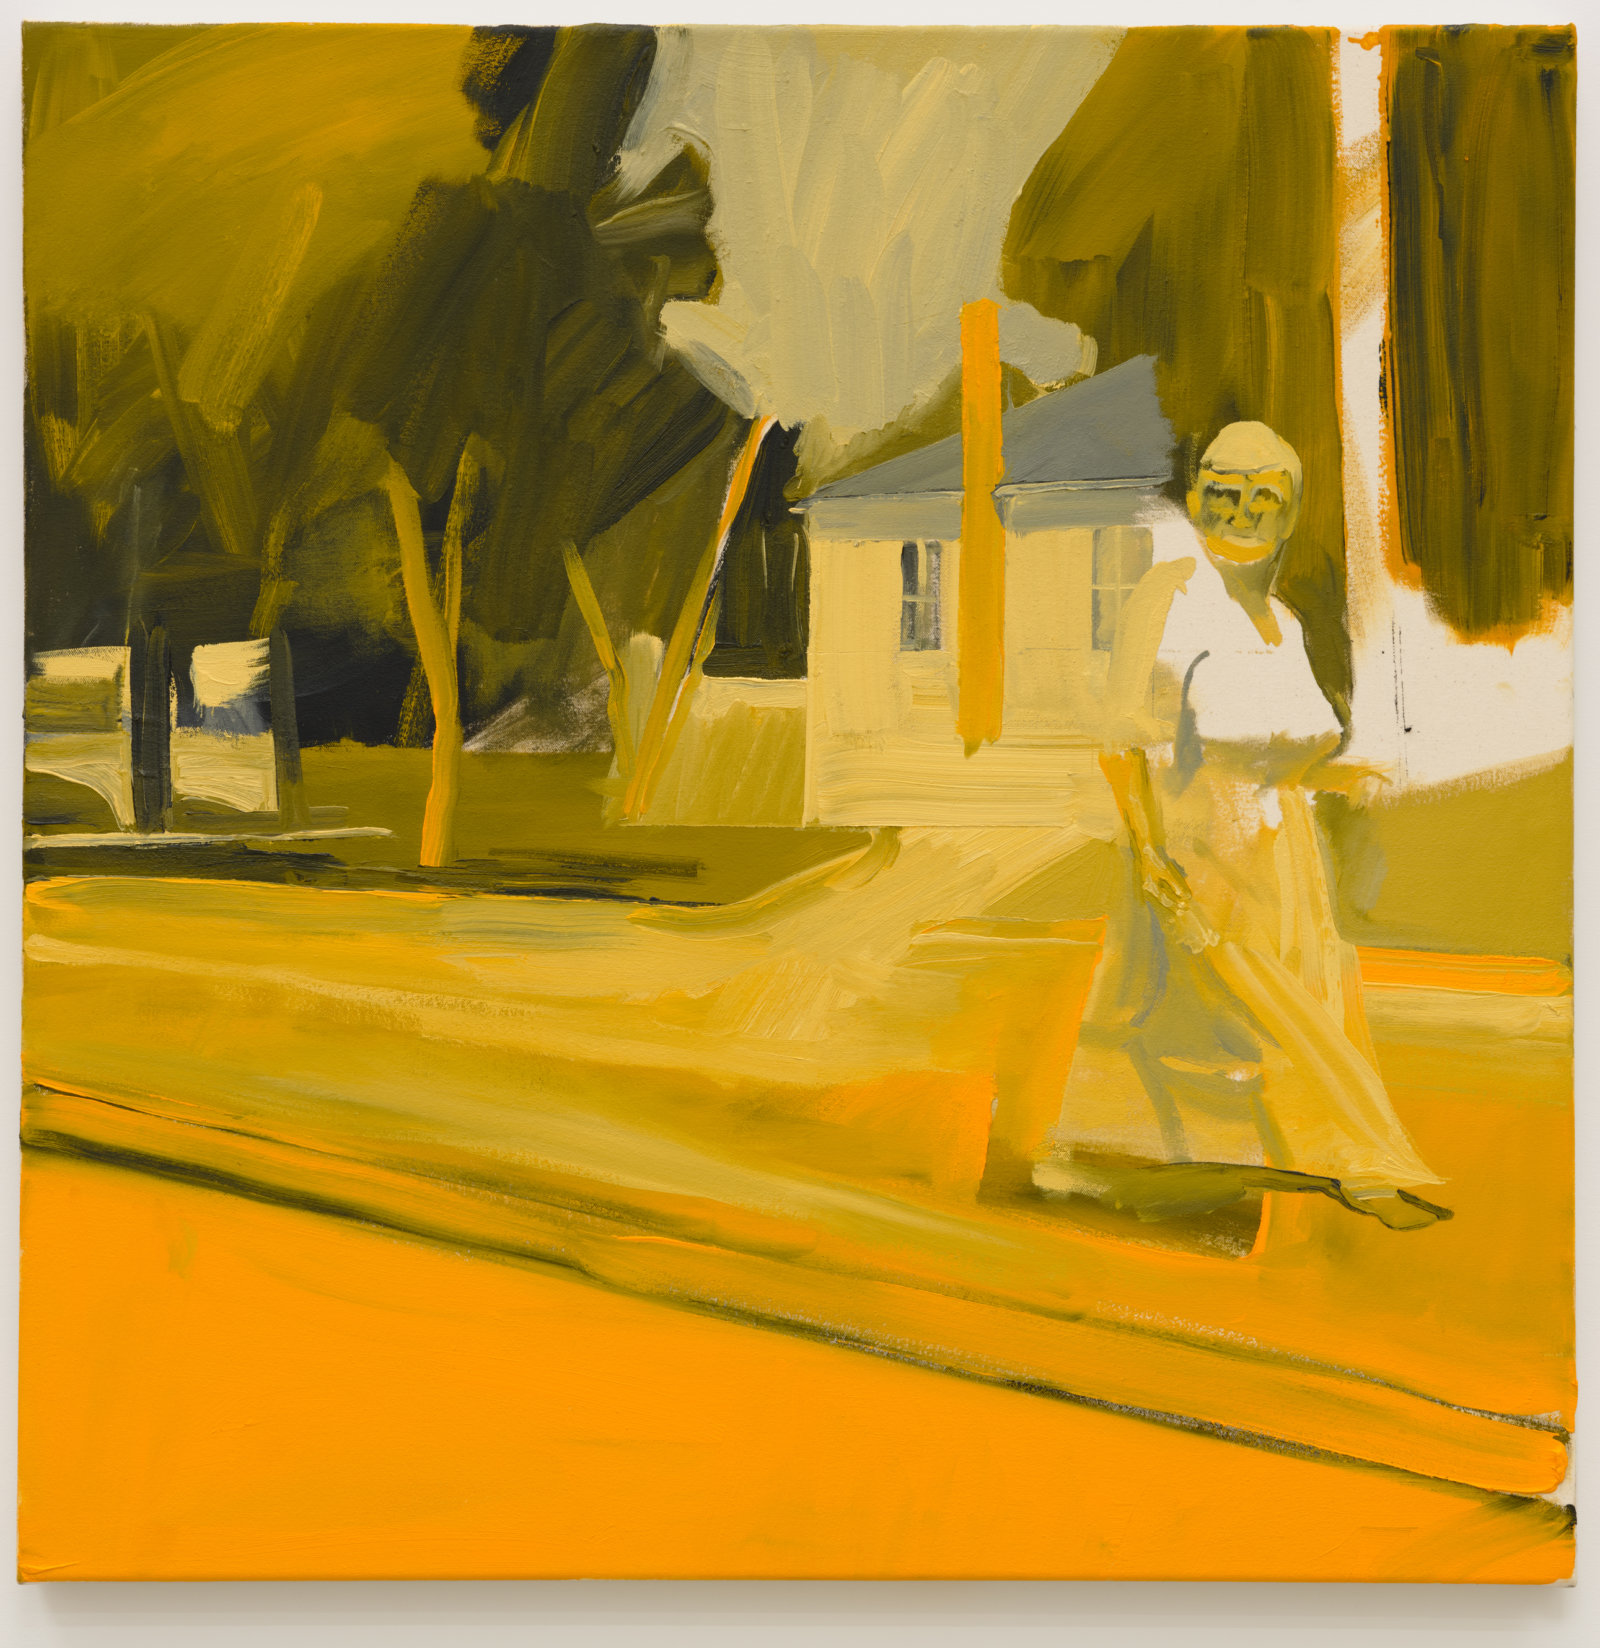 Brenda Draney, Procession, 2013, oil on canvas, 36 x 36 in. (91 x 91 cm)